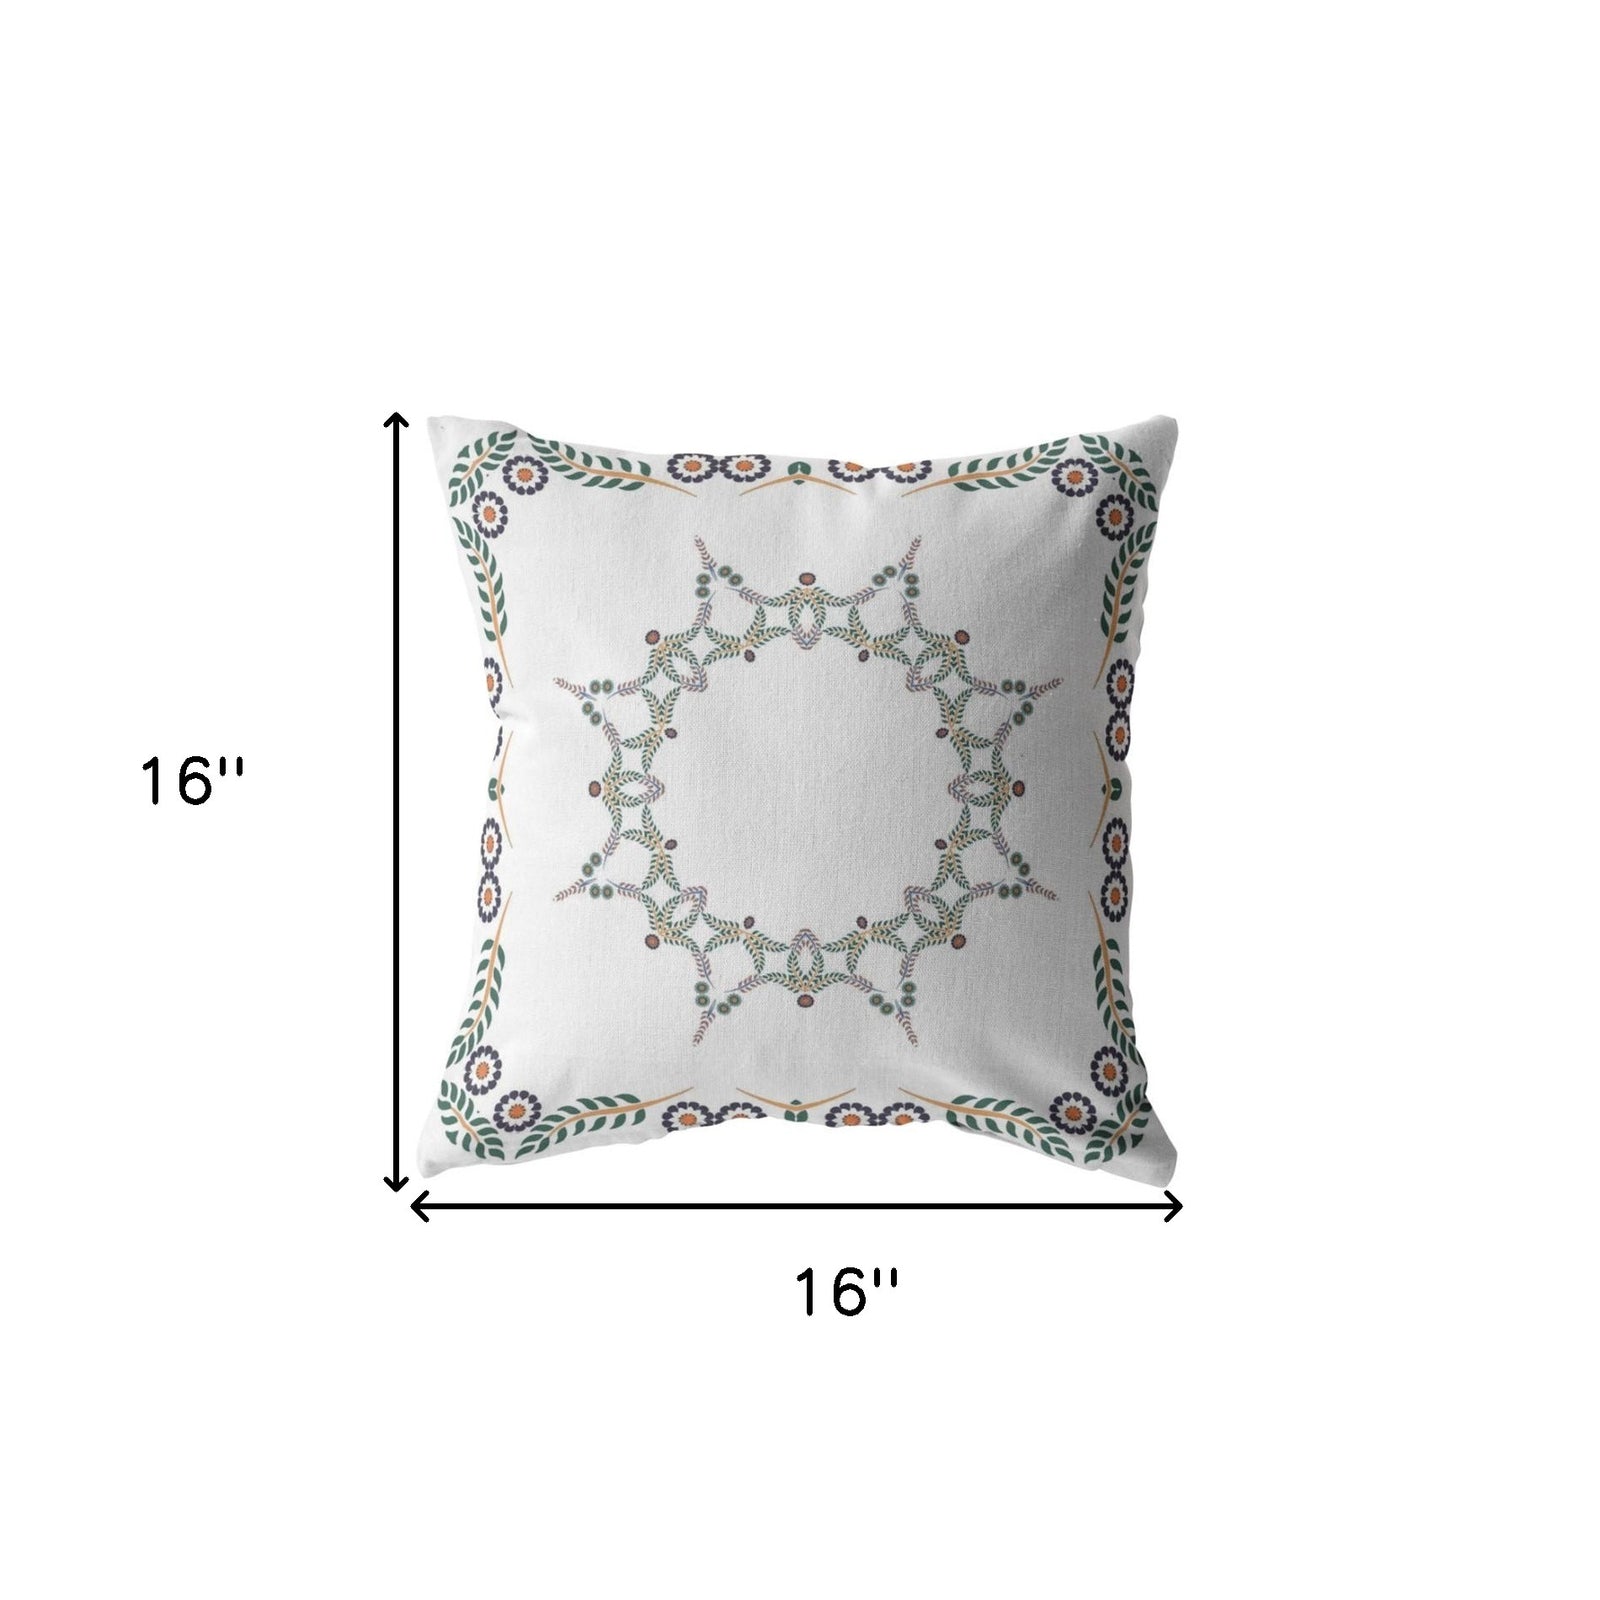 16" X 16" White Zippered Geometric Indoor Outdoor Throw Pillow